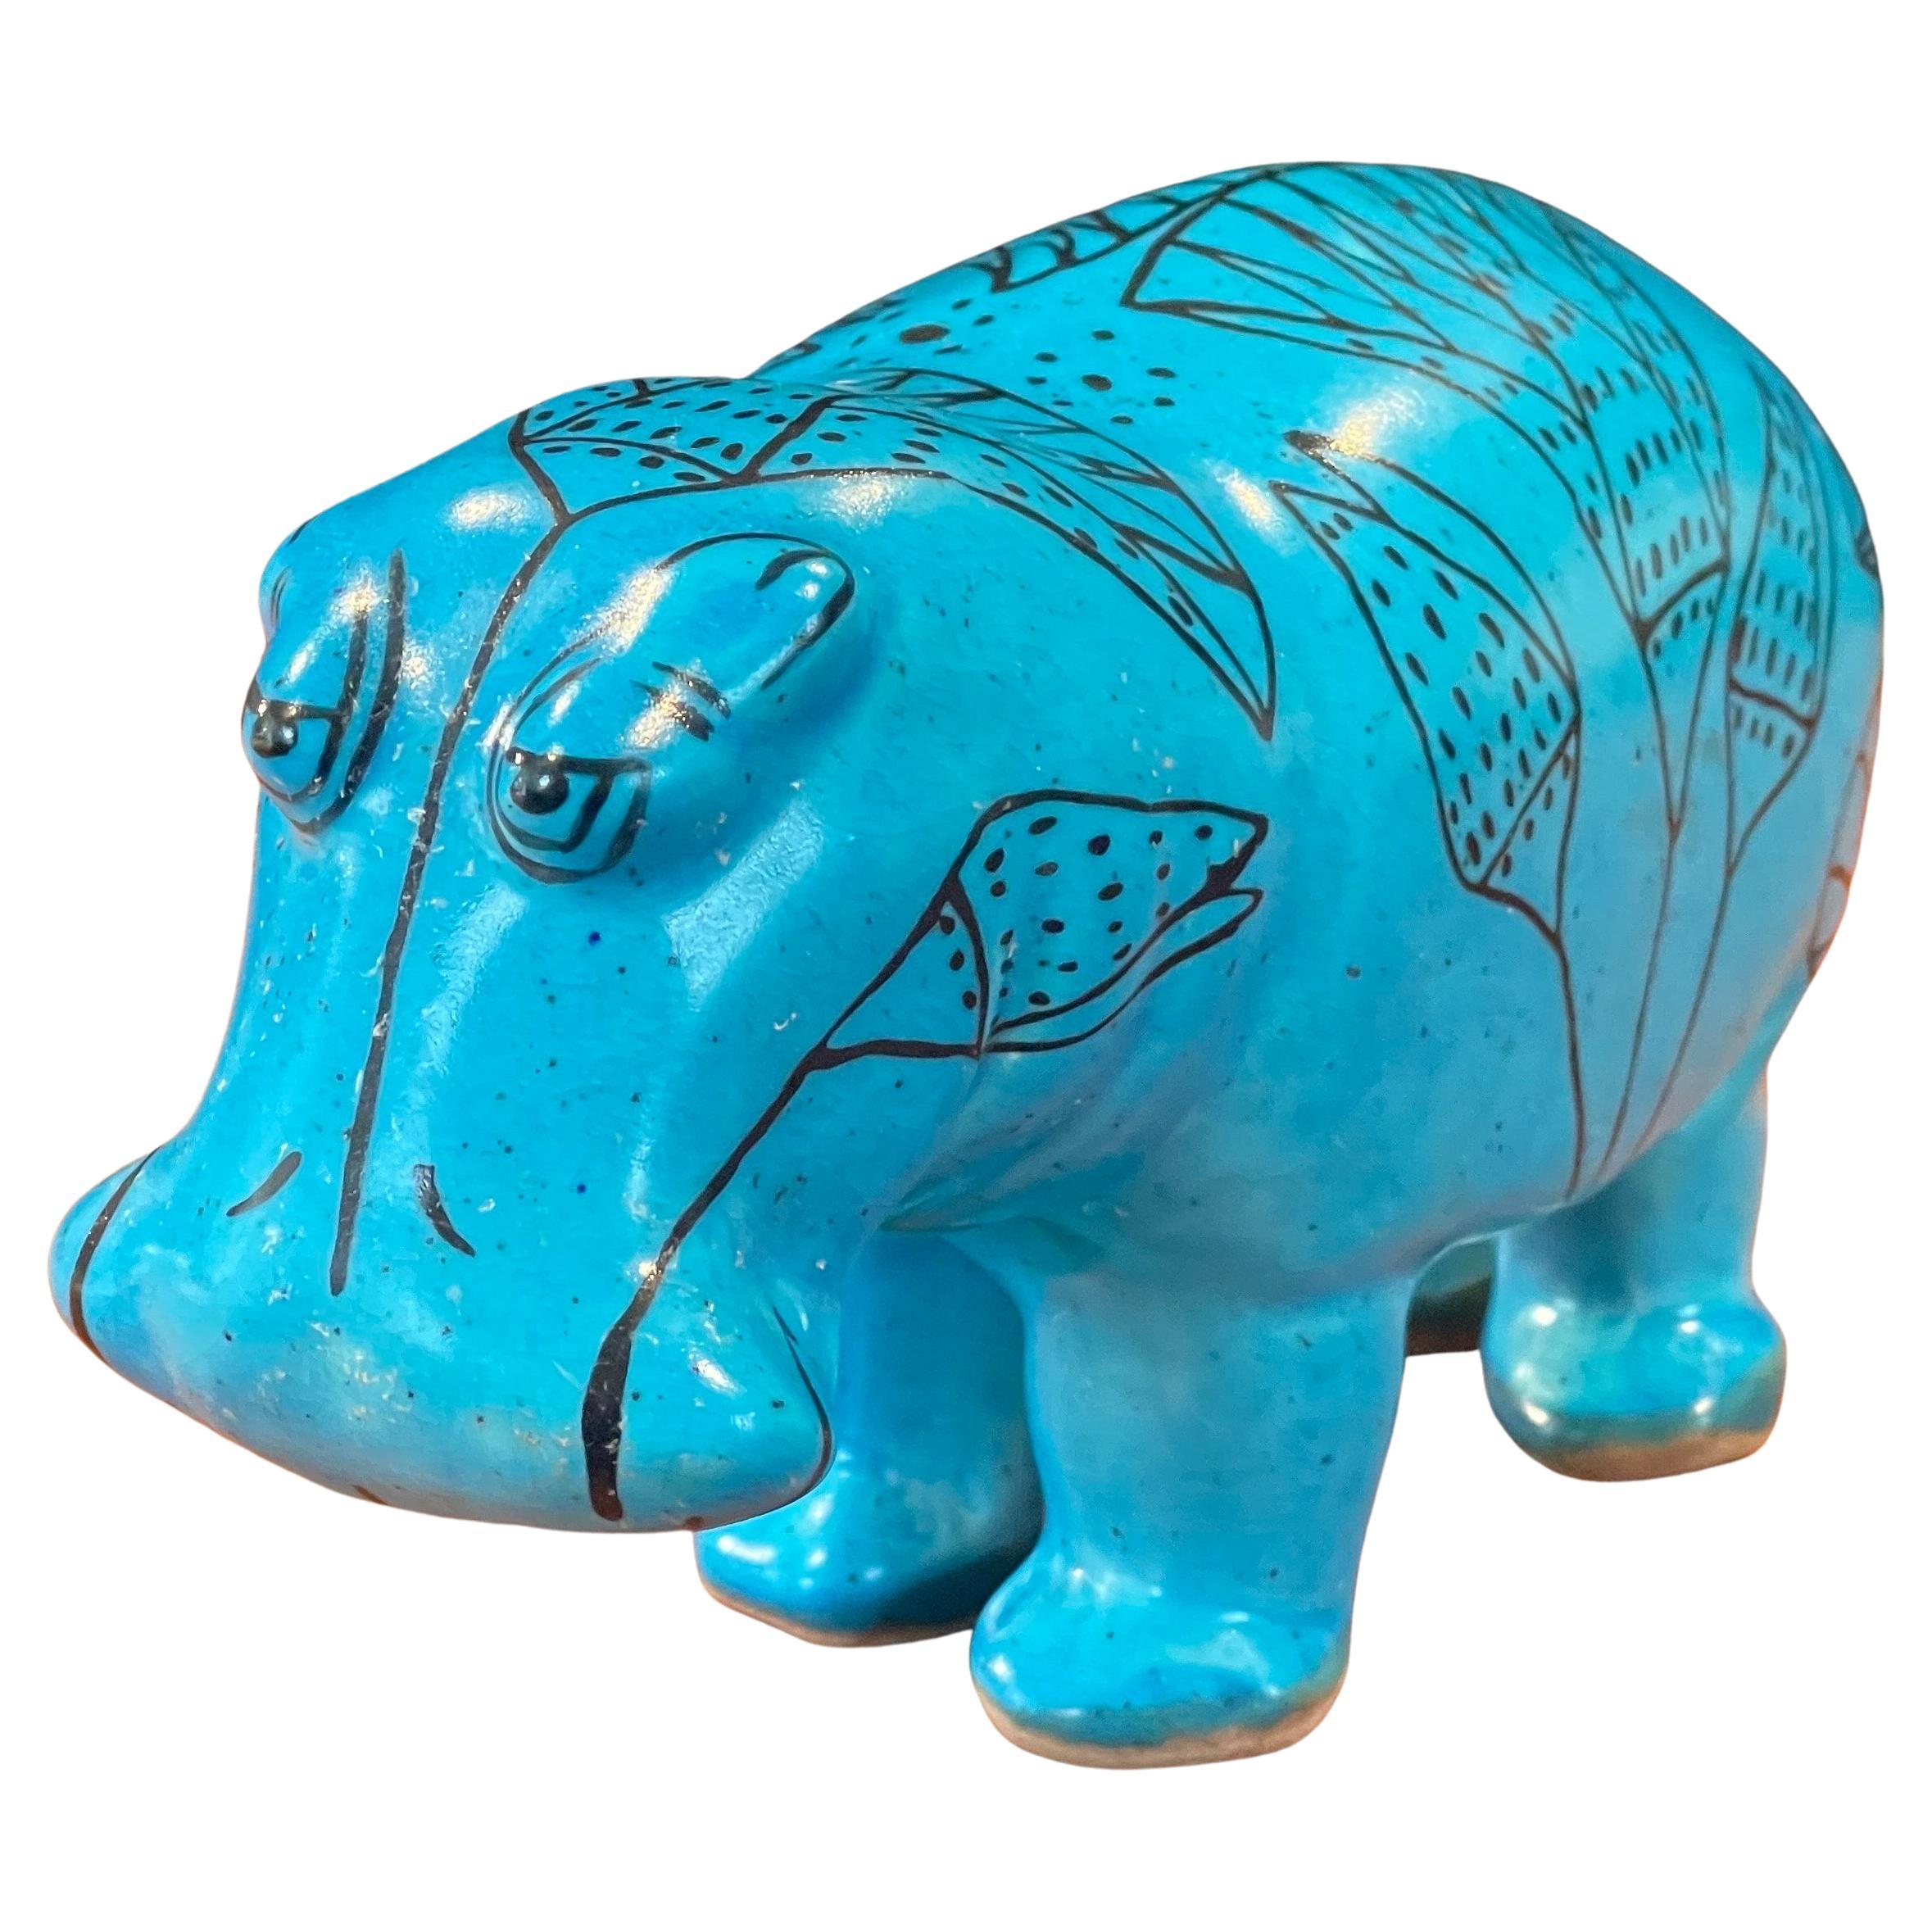 Mid-Century Modern Sculpture en céramique bleue « William the Hippo » (William le Hippo) du Metropolitan Museum en vente